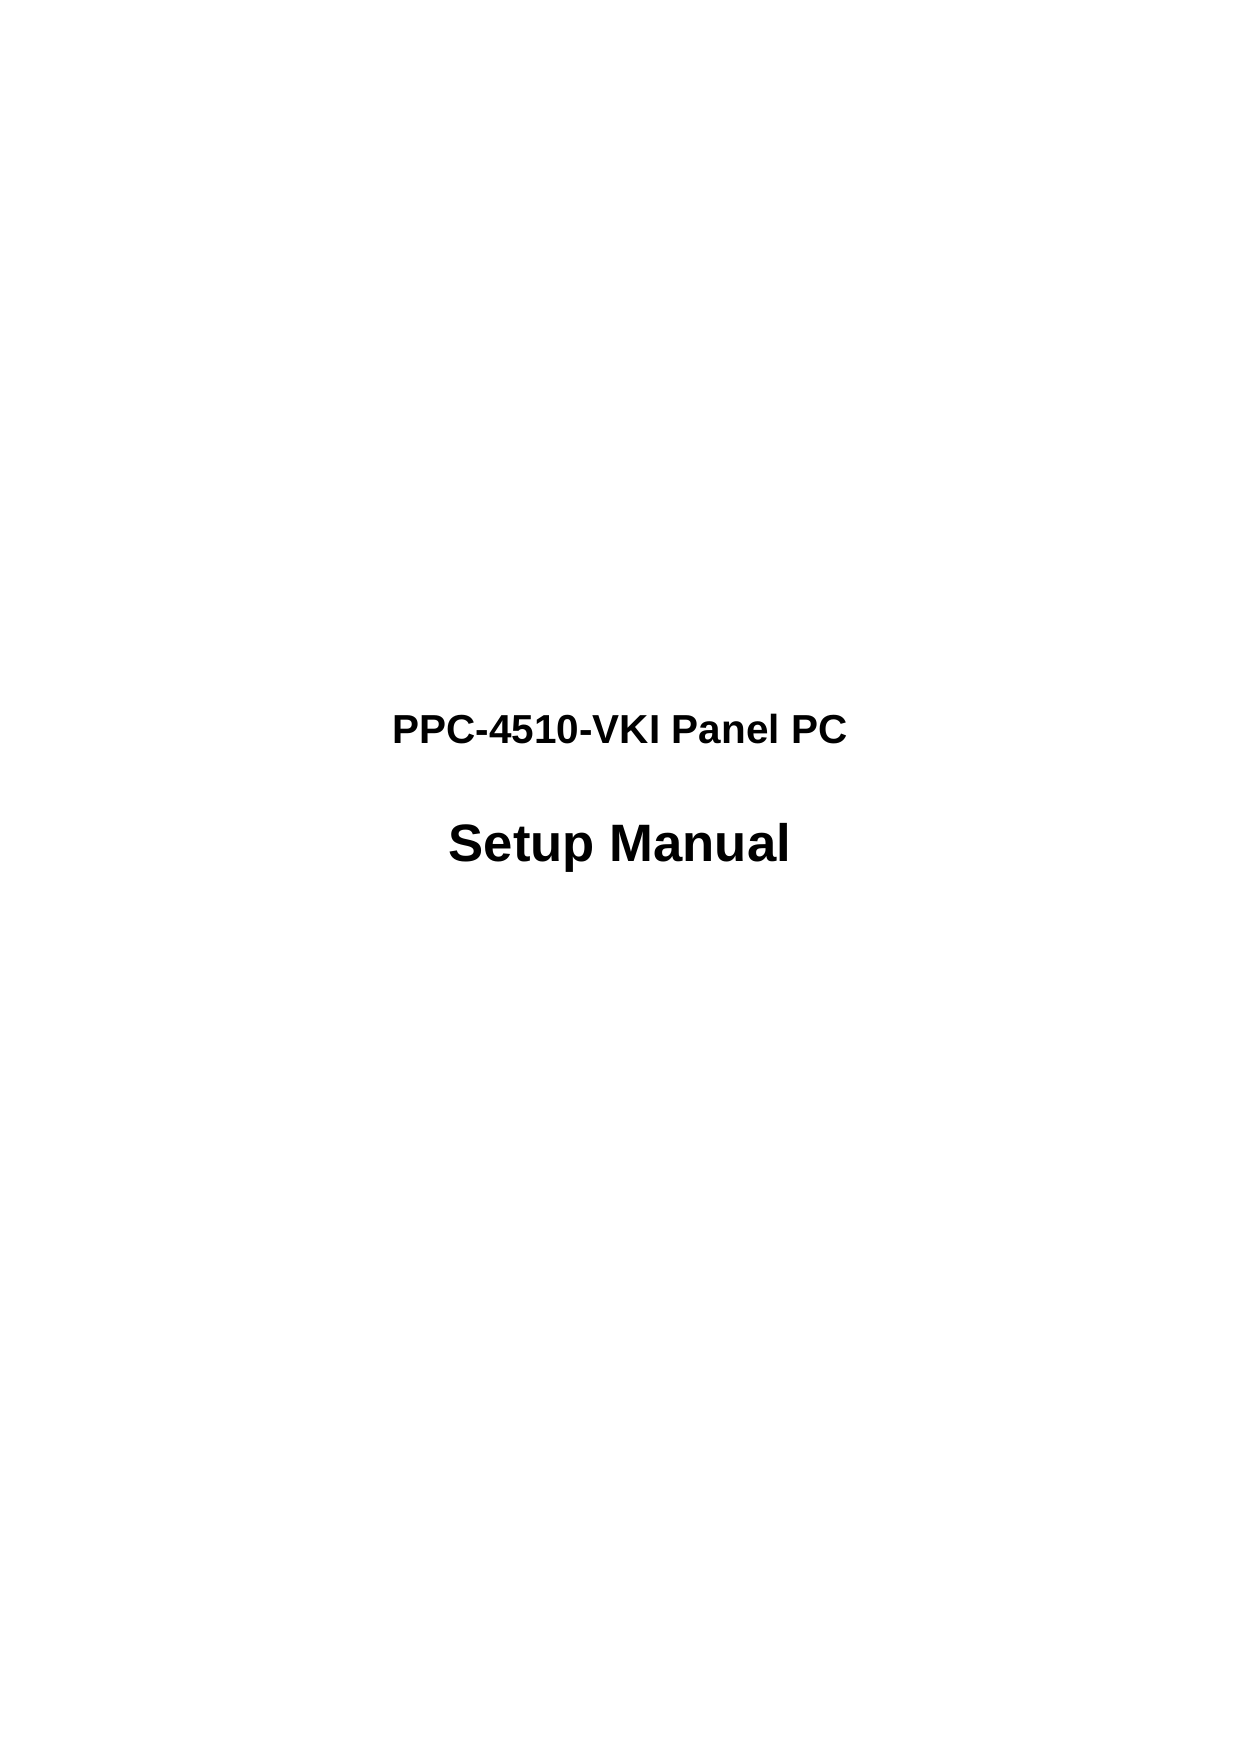                   PPC-4510-VKI Panel PC  Setup Manual  